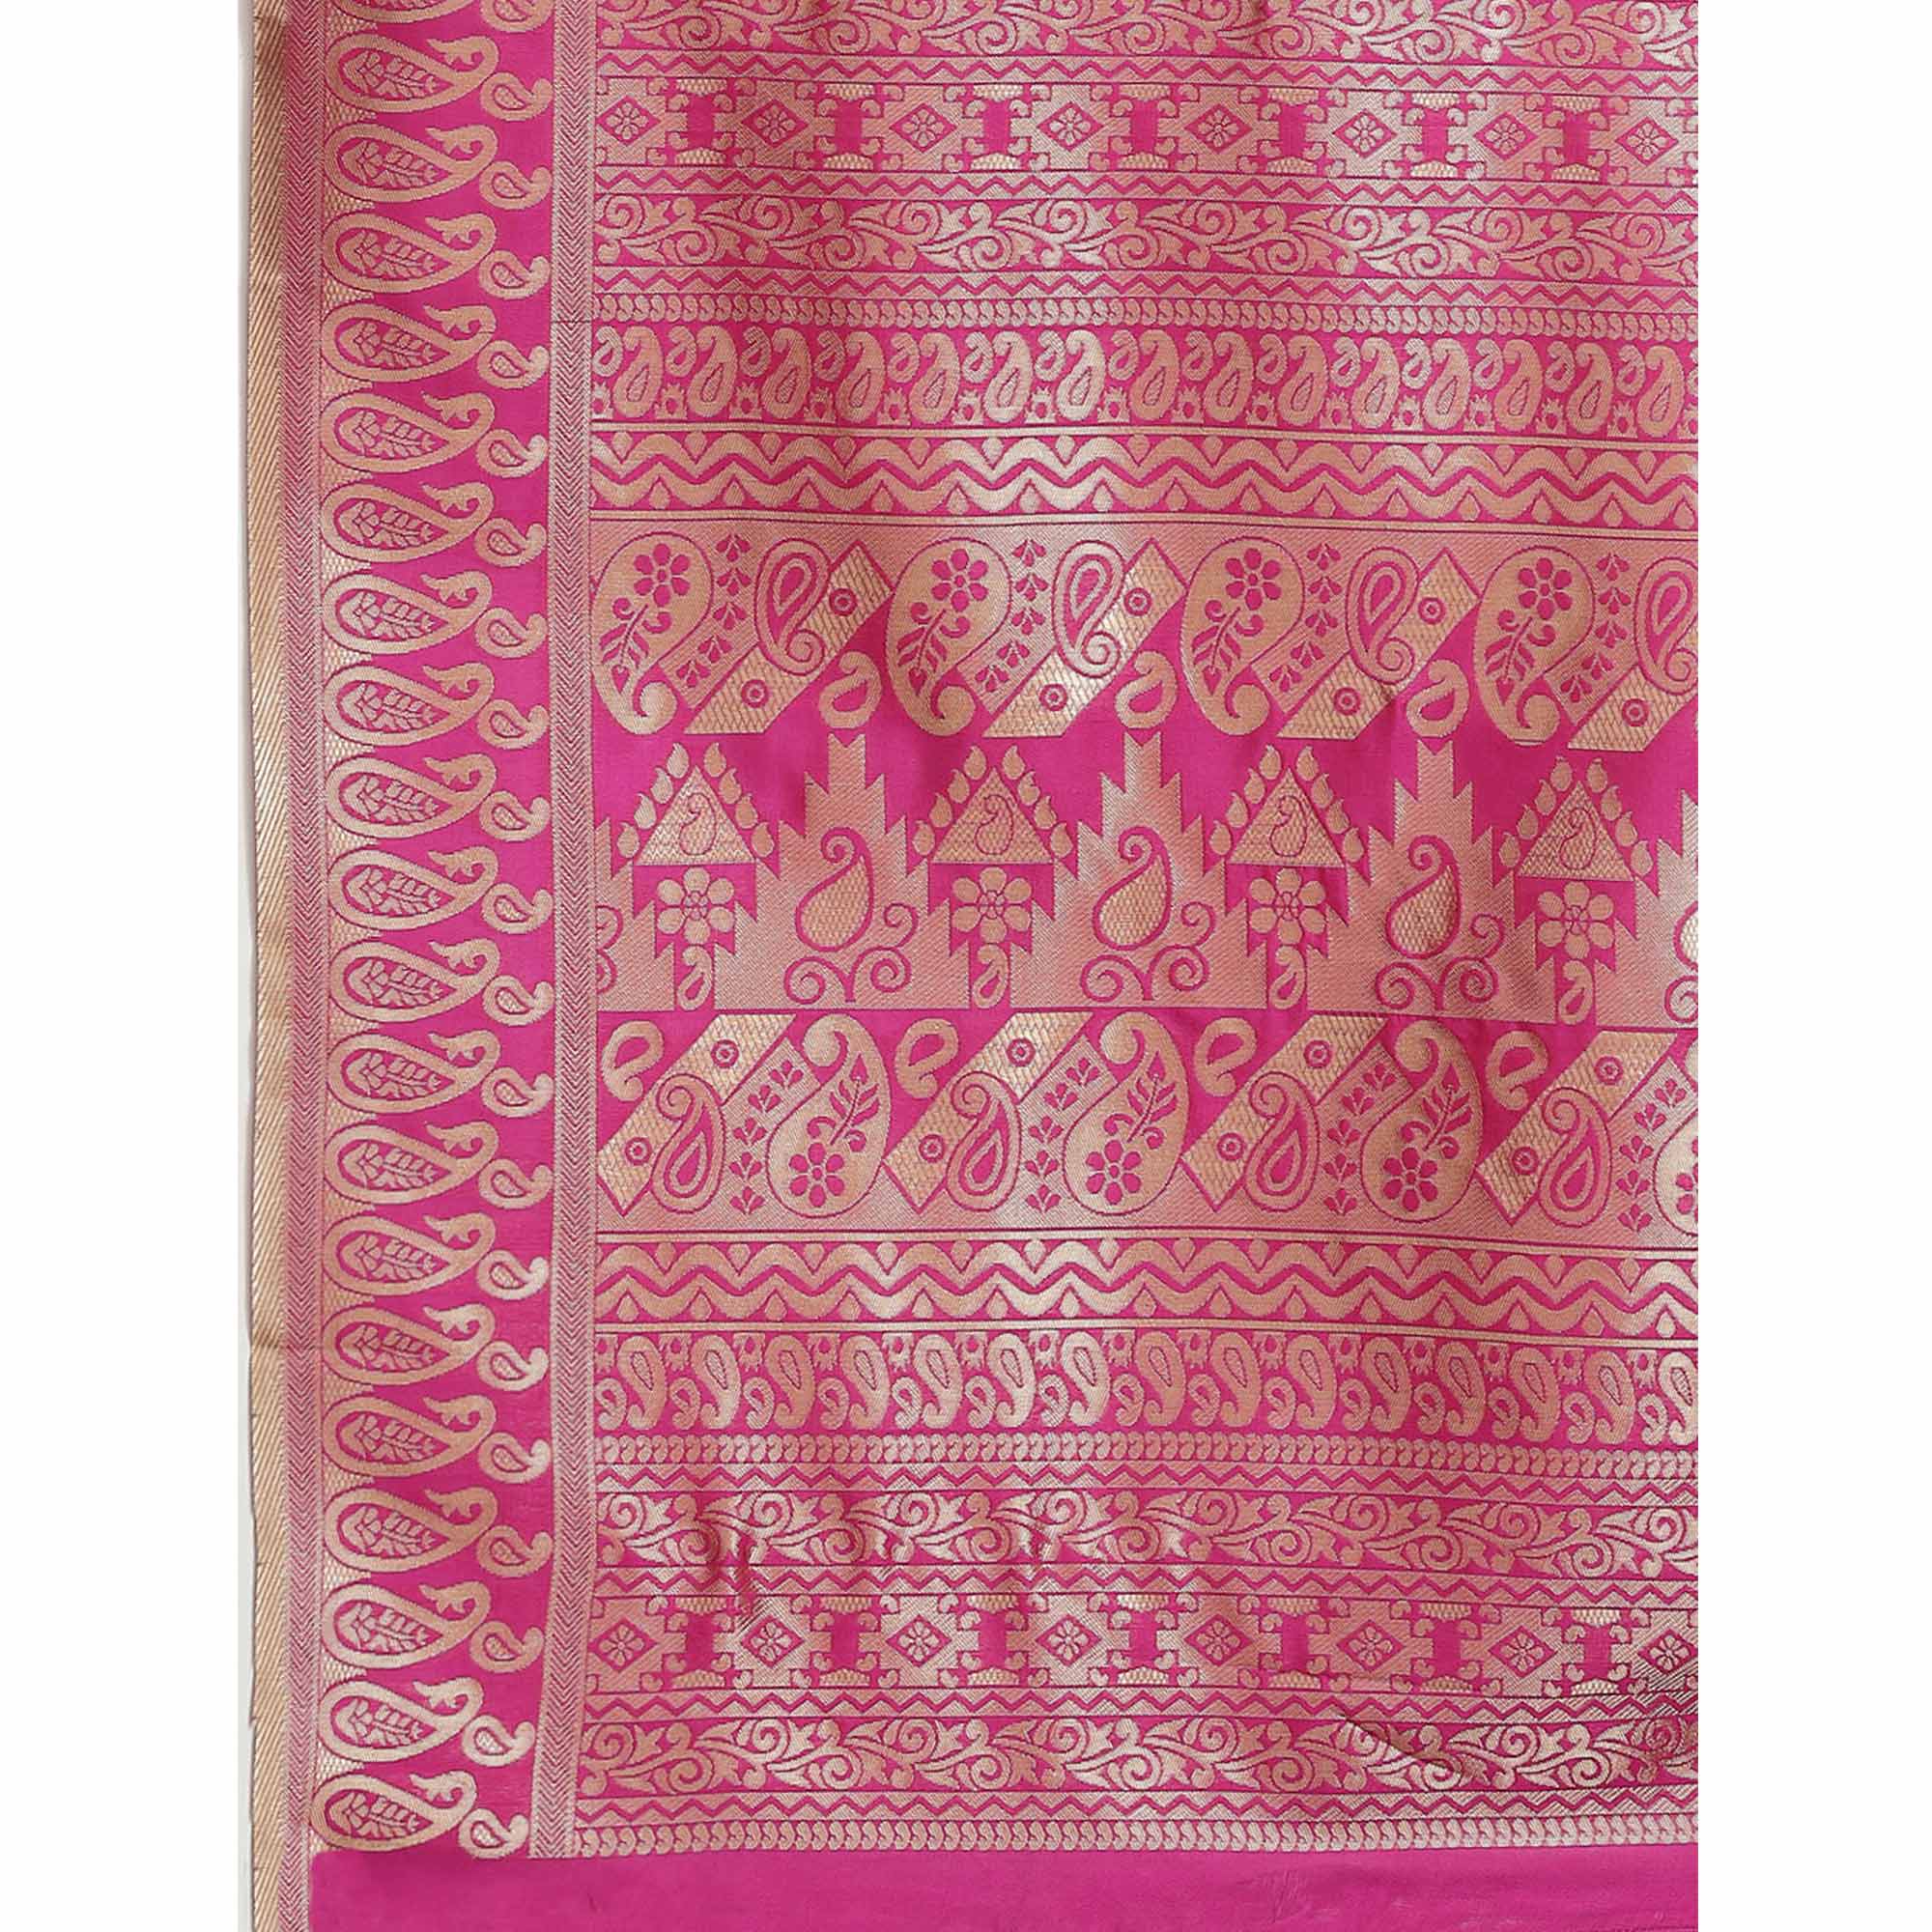 Multicolor Woven Banarasi Silk Saree